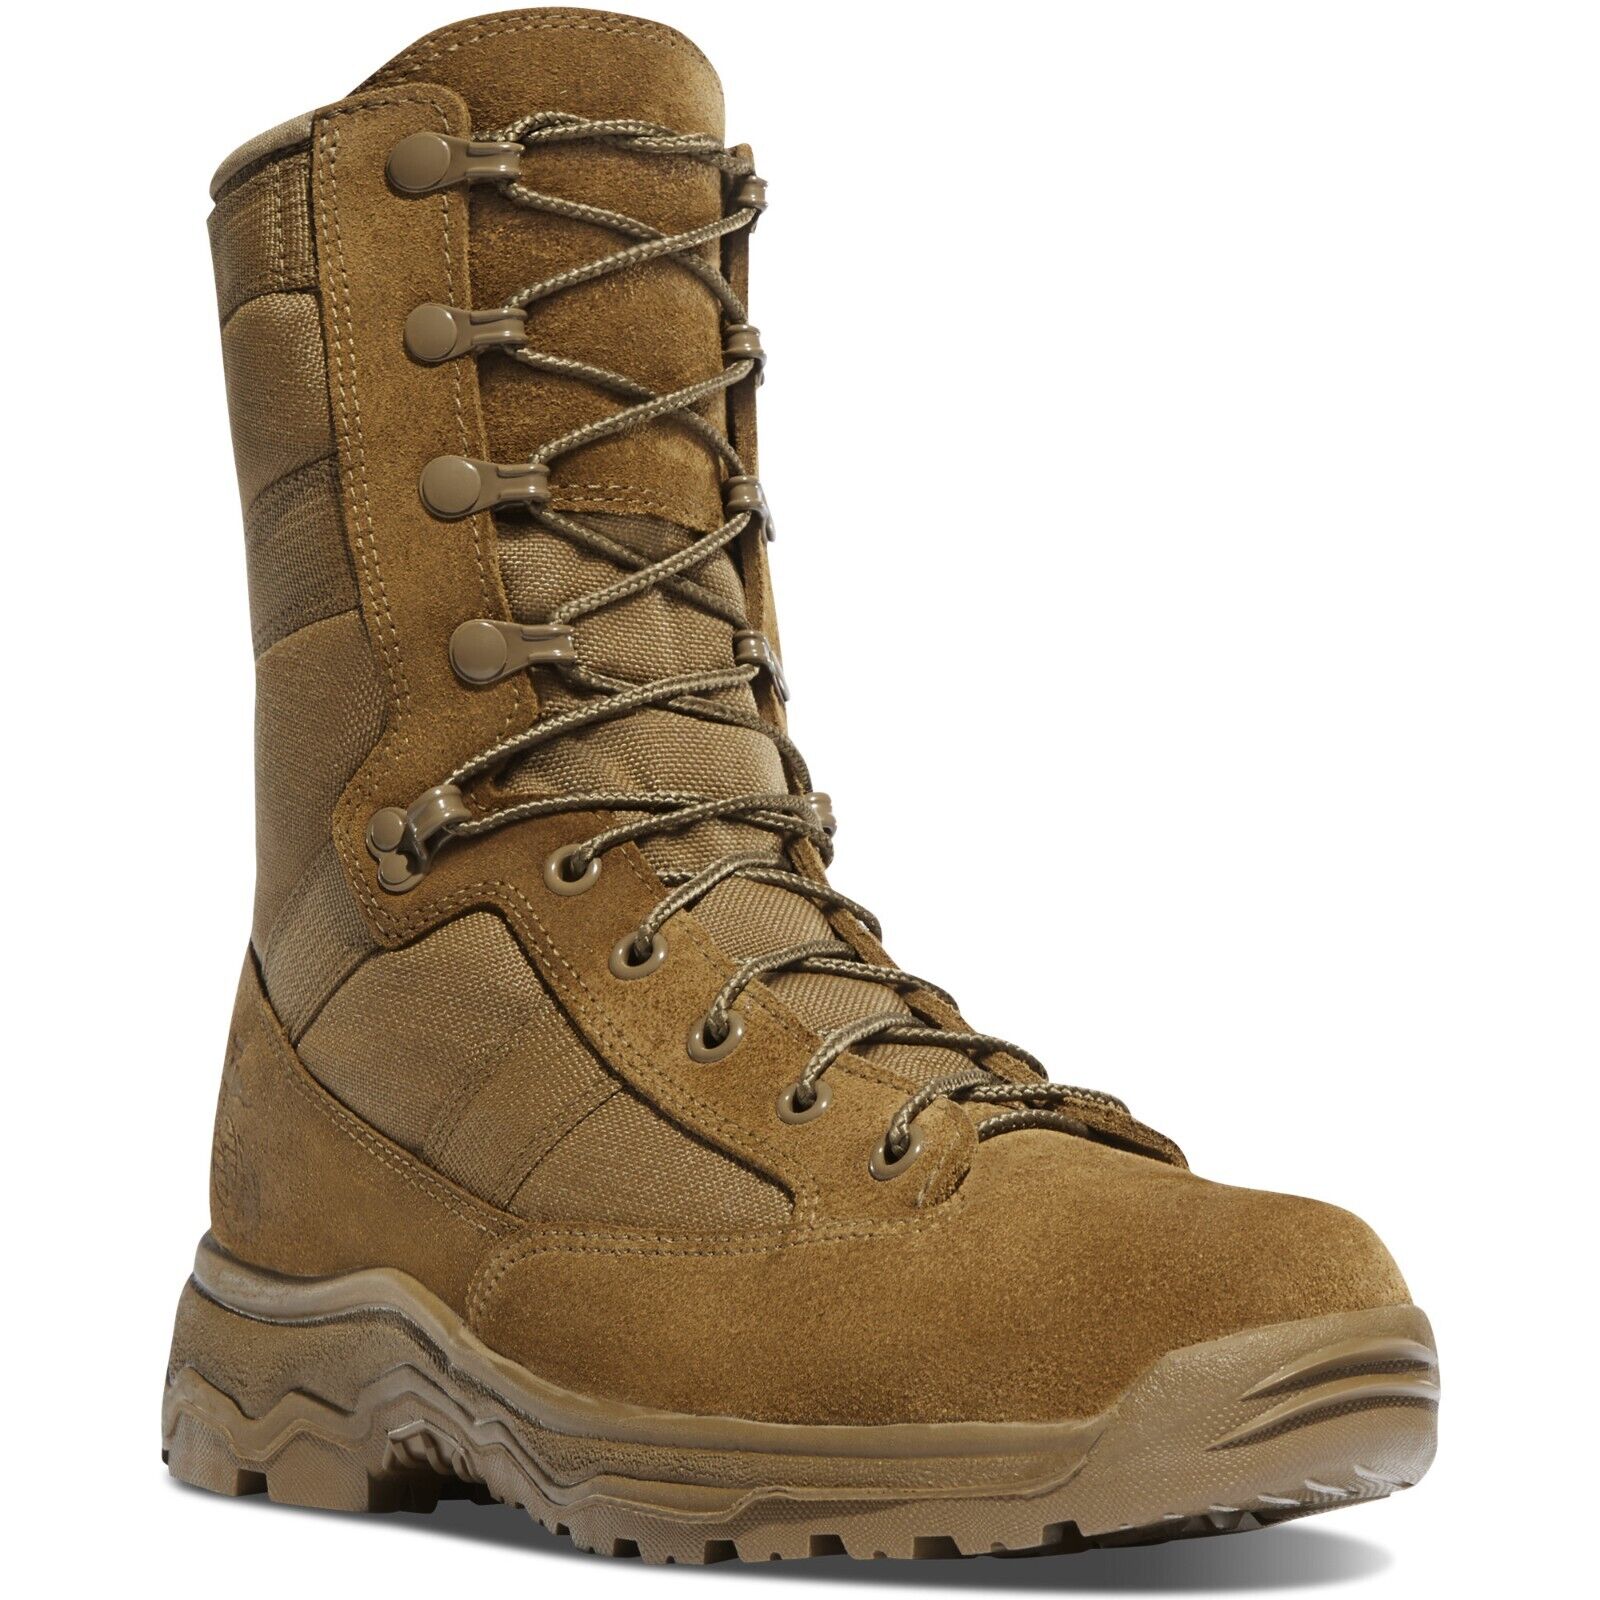 Pre-owned Danner 53231 Men's Reckoning 8" Coyote Usmc Hot Ega Tactical Boots Shoes